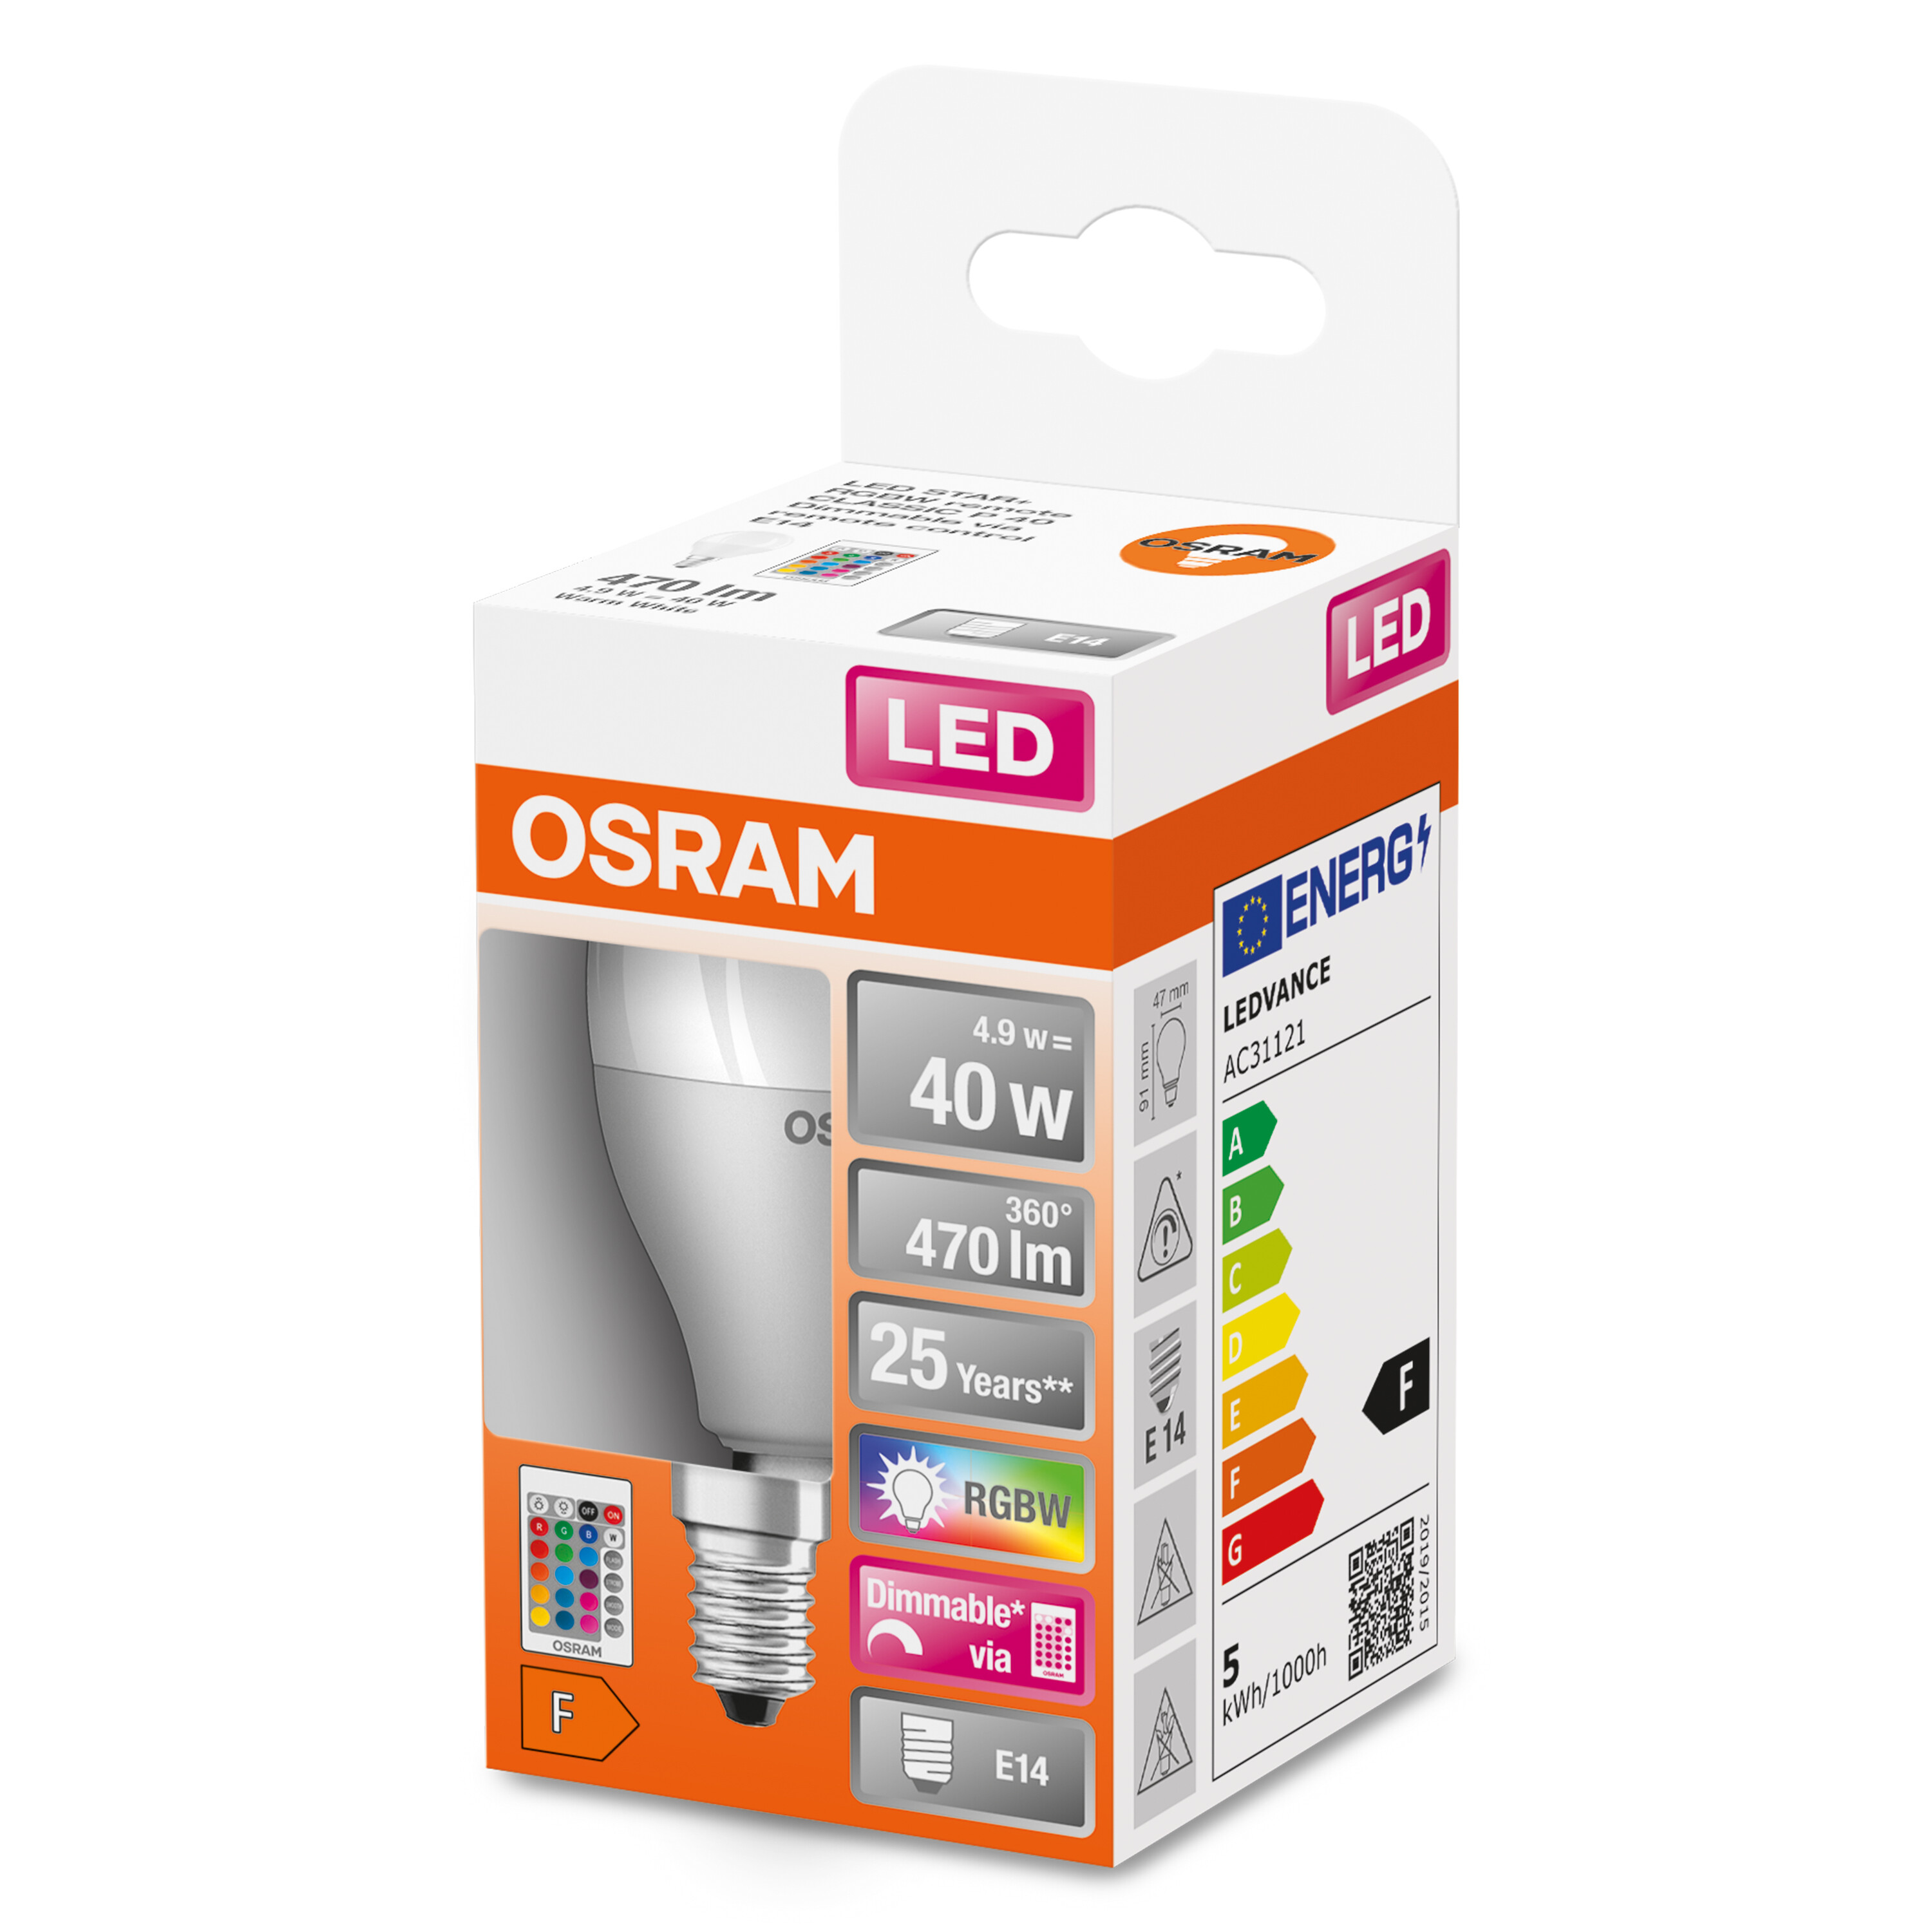 OSRAM  LED RGBW Warmweiß Lampe LED remote control with lamps Retrofit